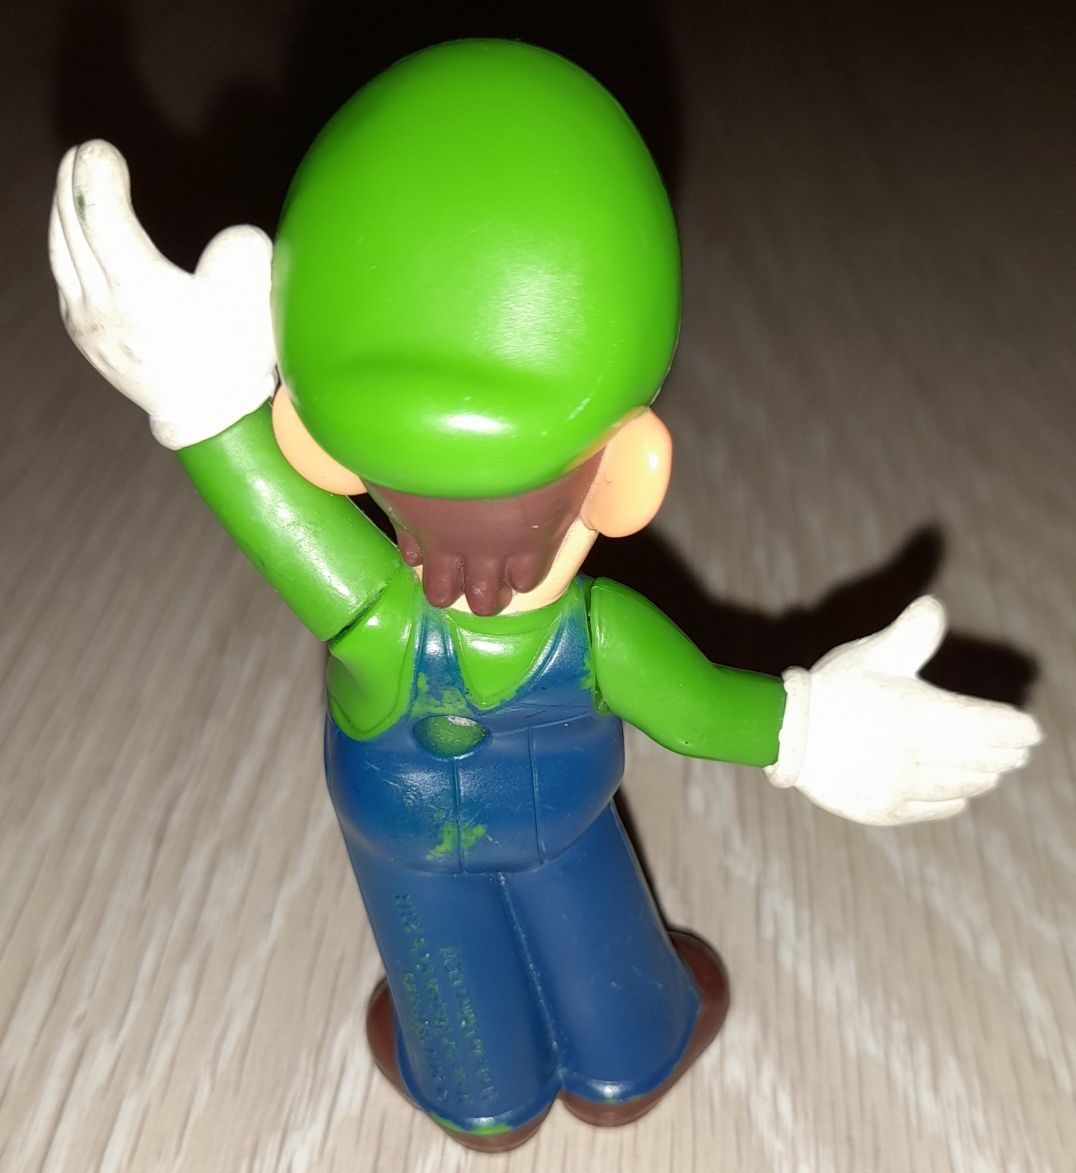 Figurka Mario 9 cm zabawka!